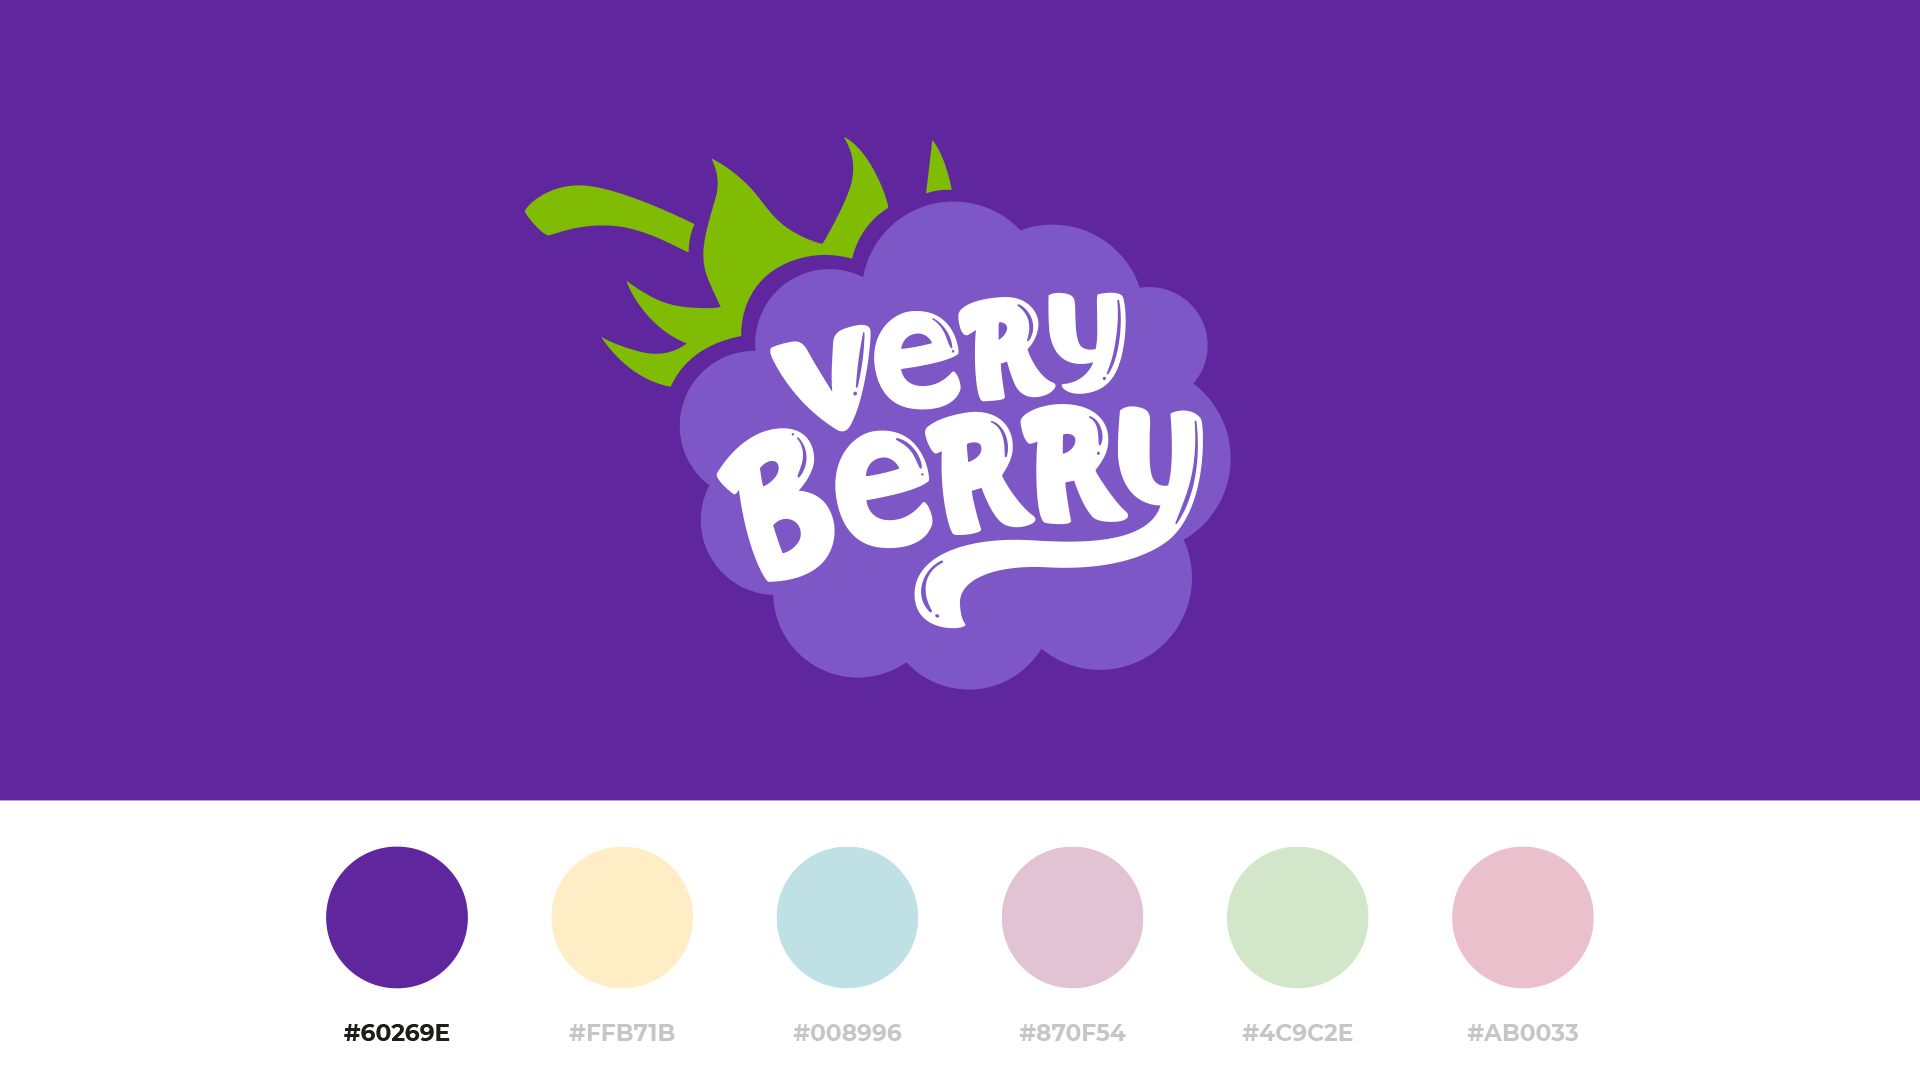 Very Berry image